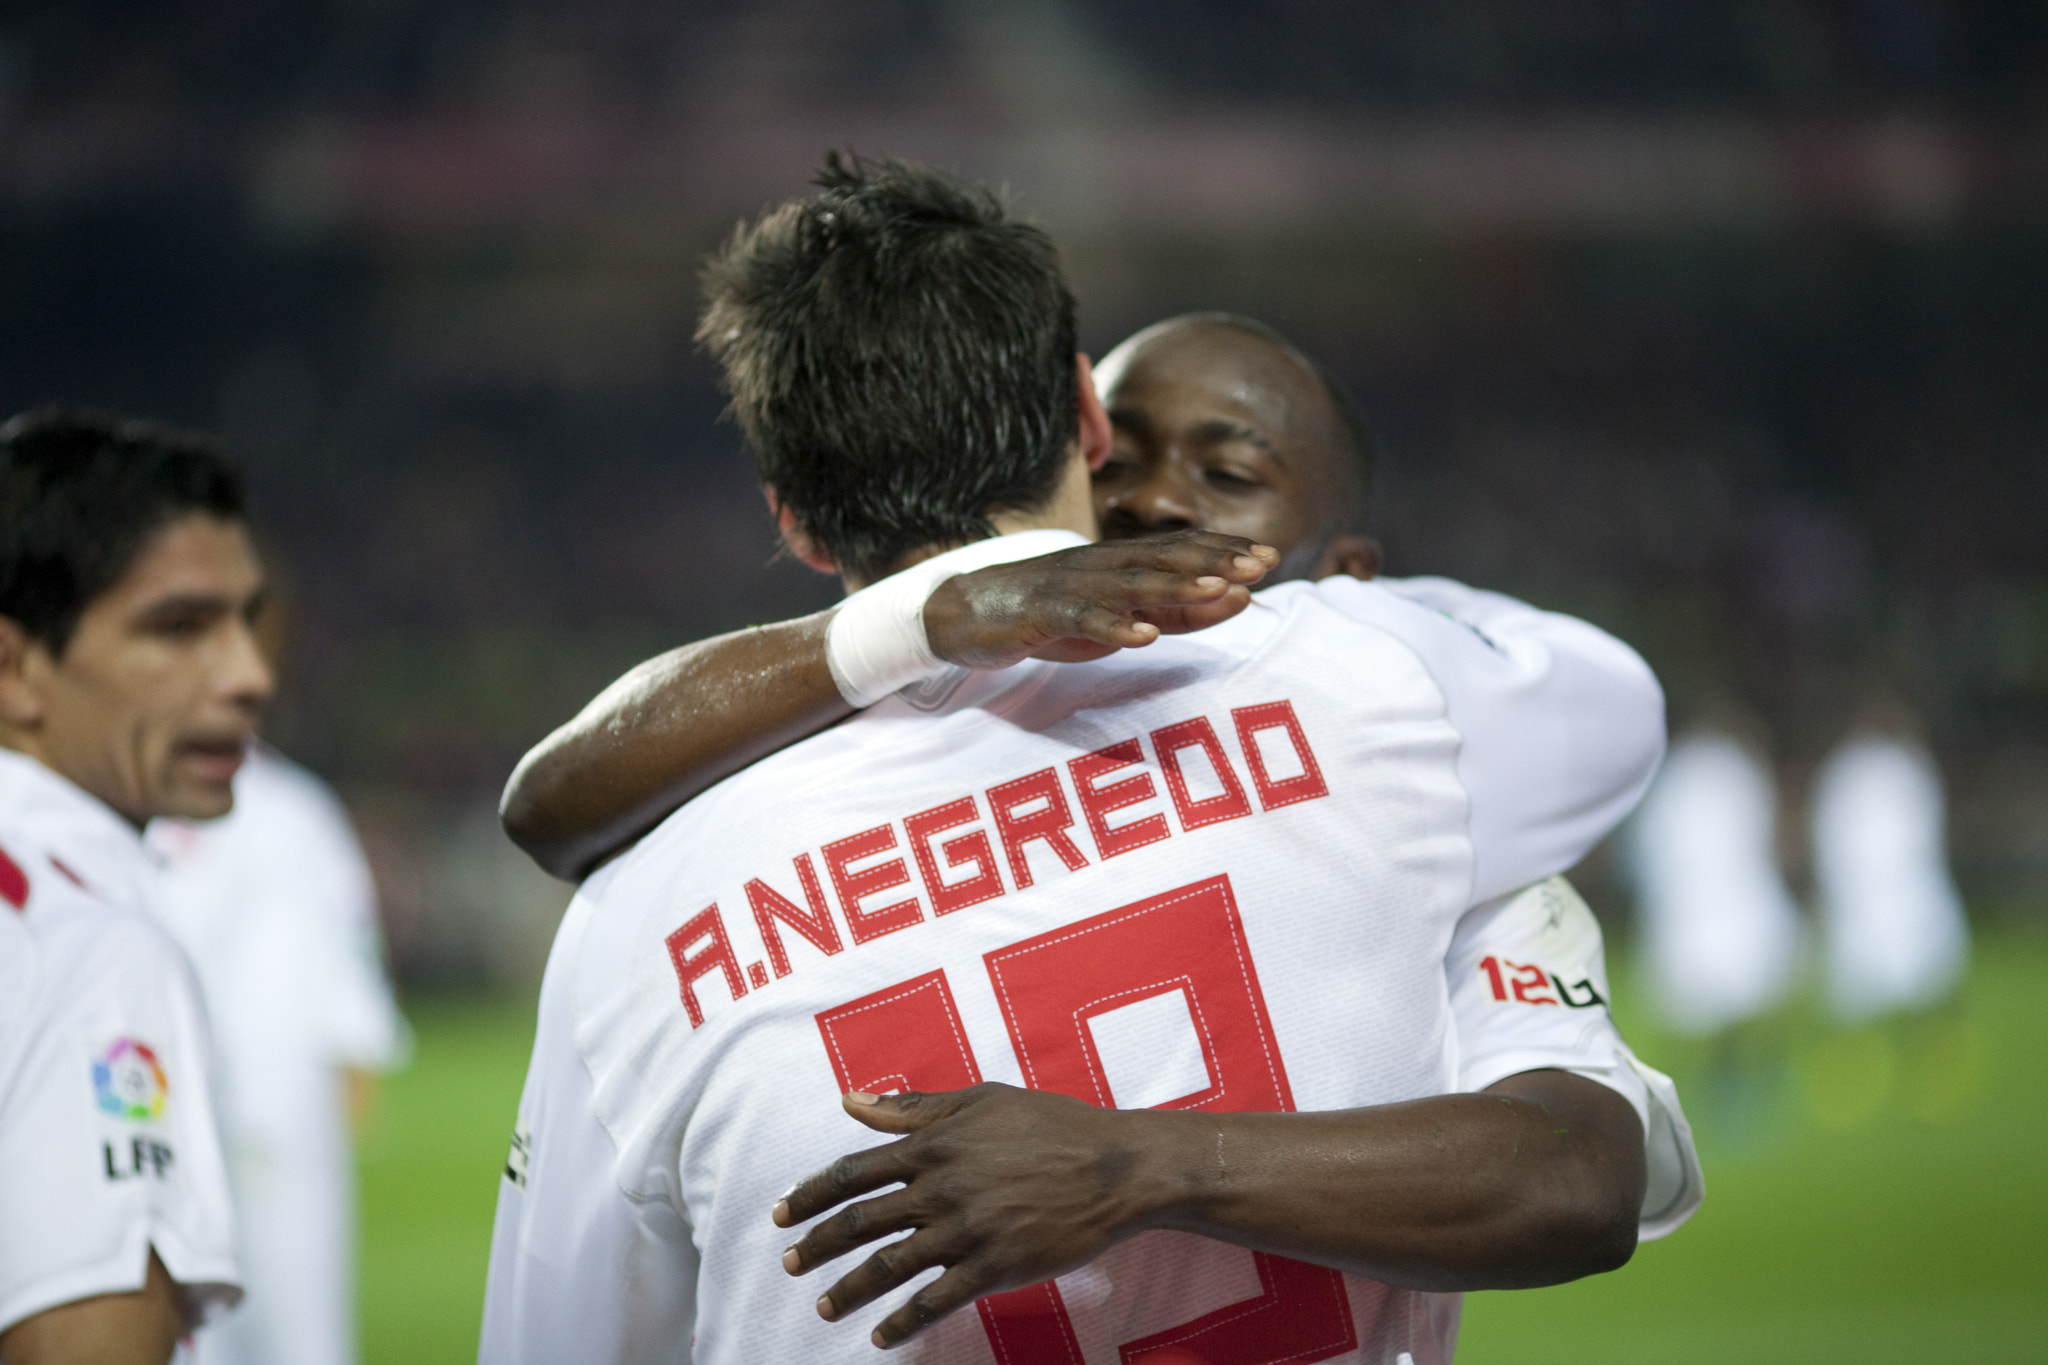 Zokora and Negredo hugging after a goal scoring. Spanish Liga game between Sevilla FC and Valencia C